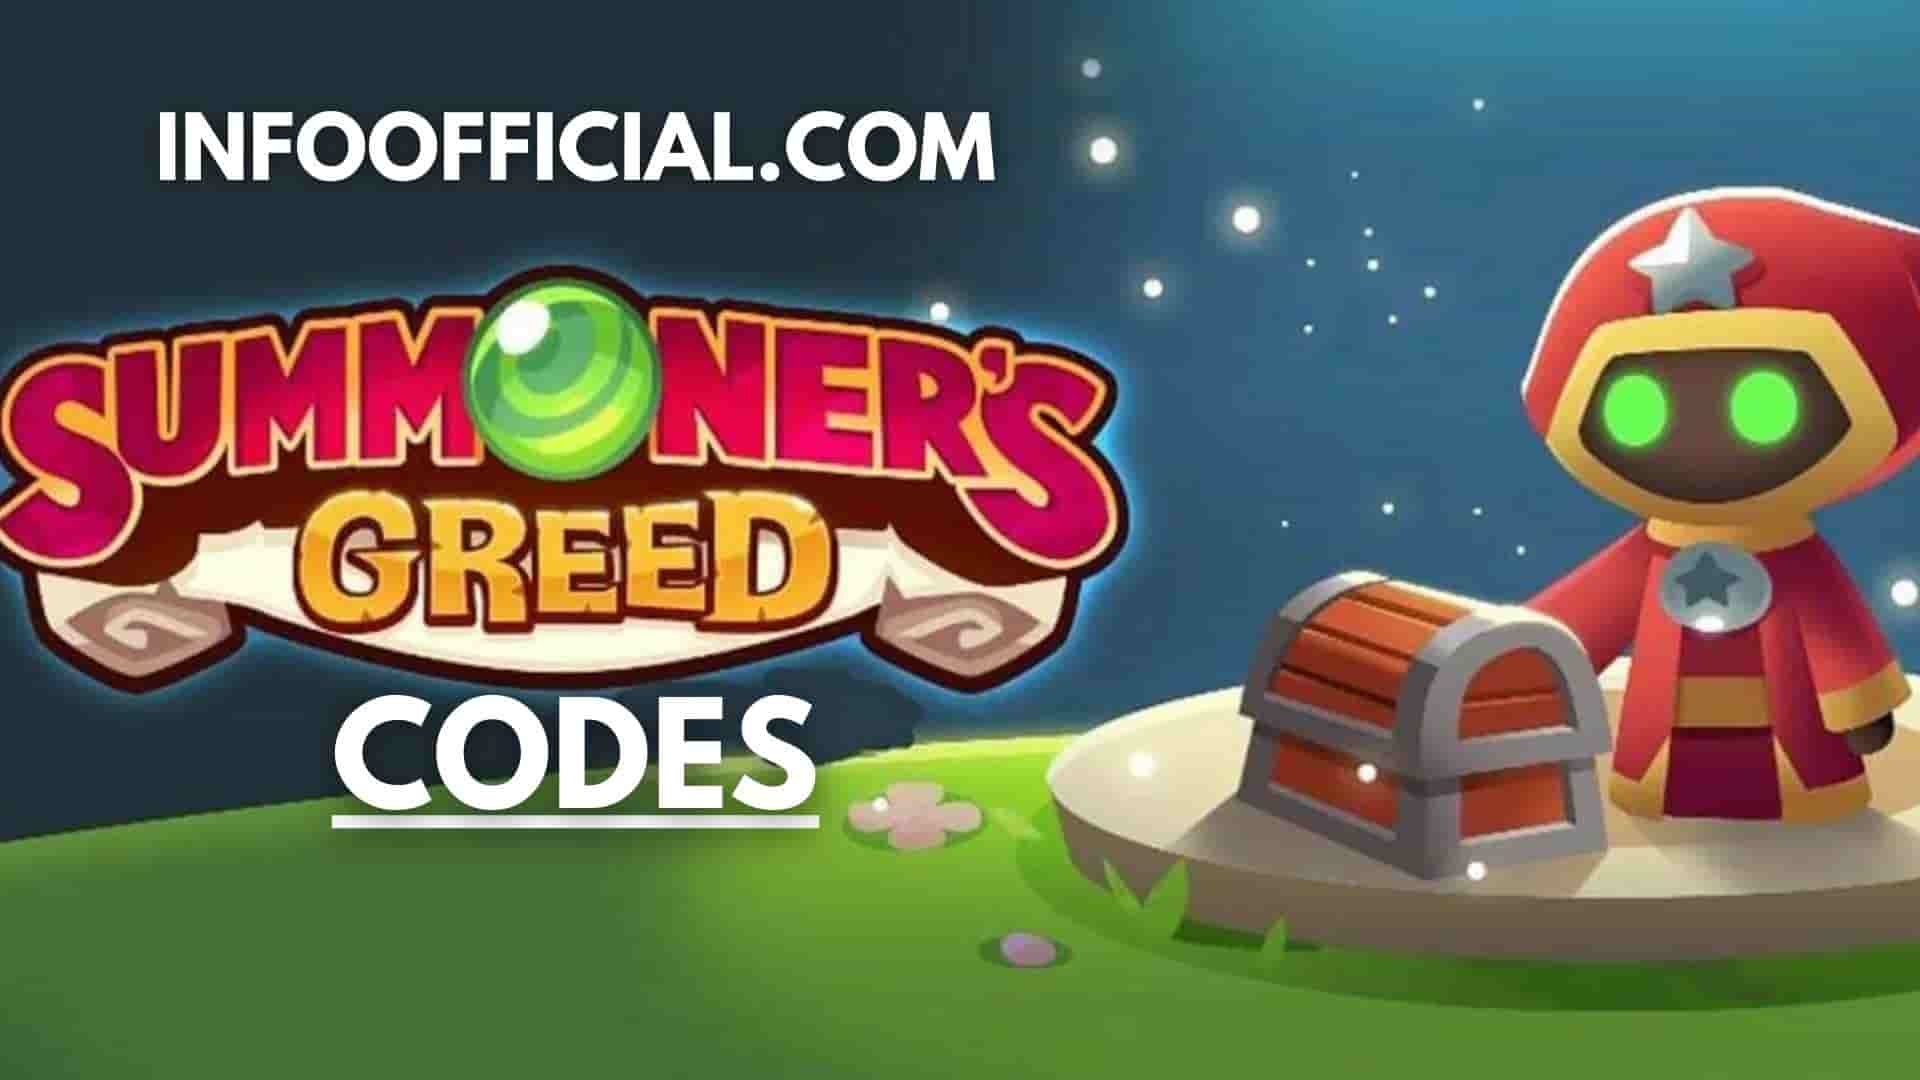 Summoner's Greed Codes